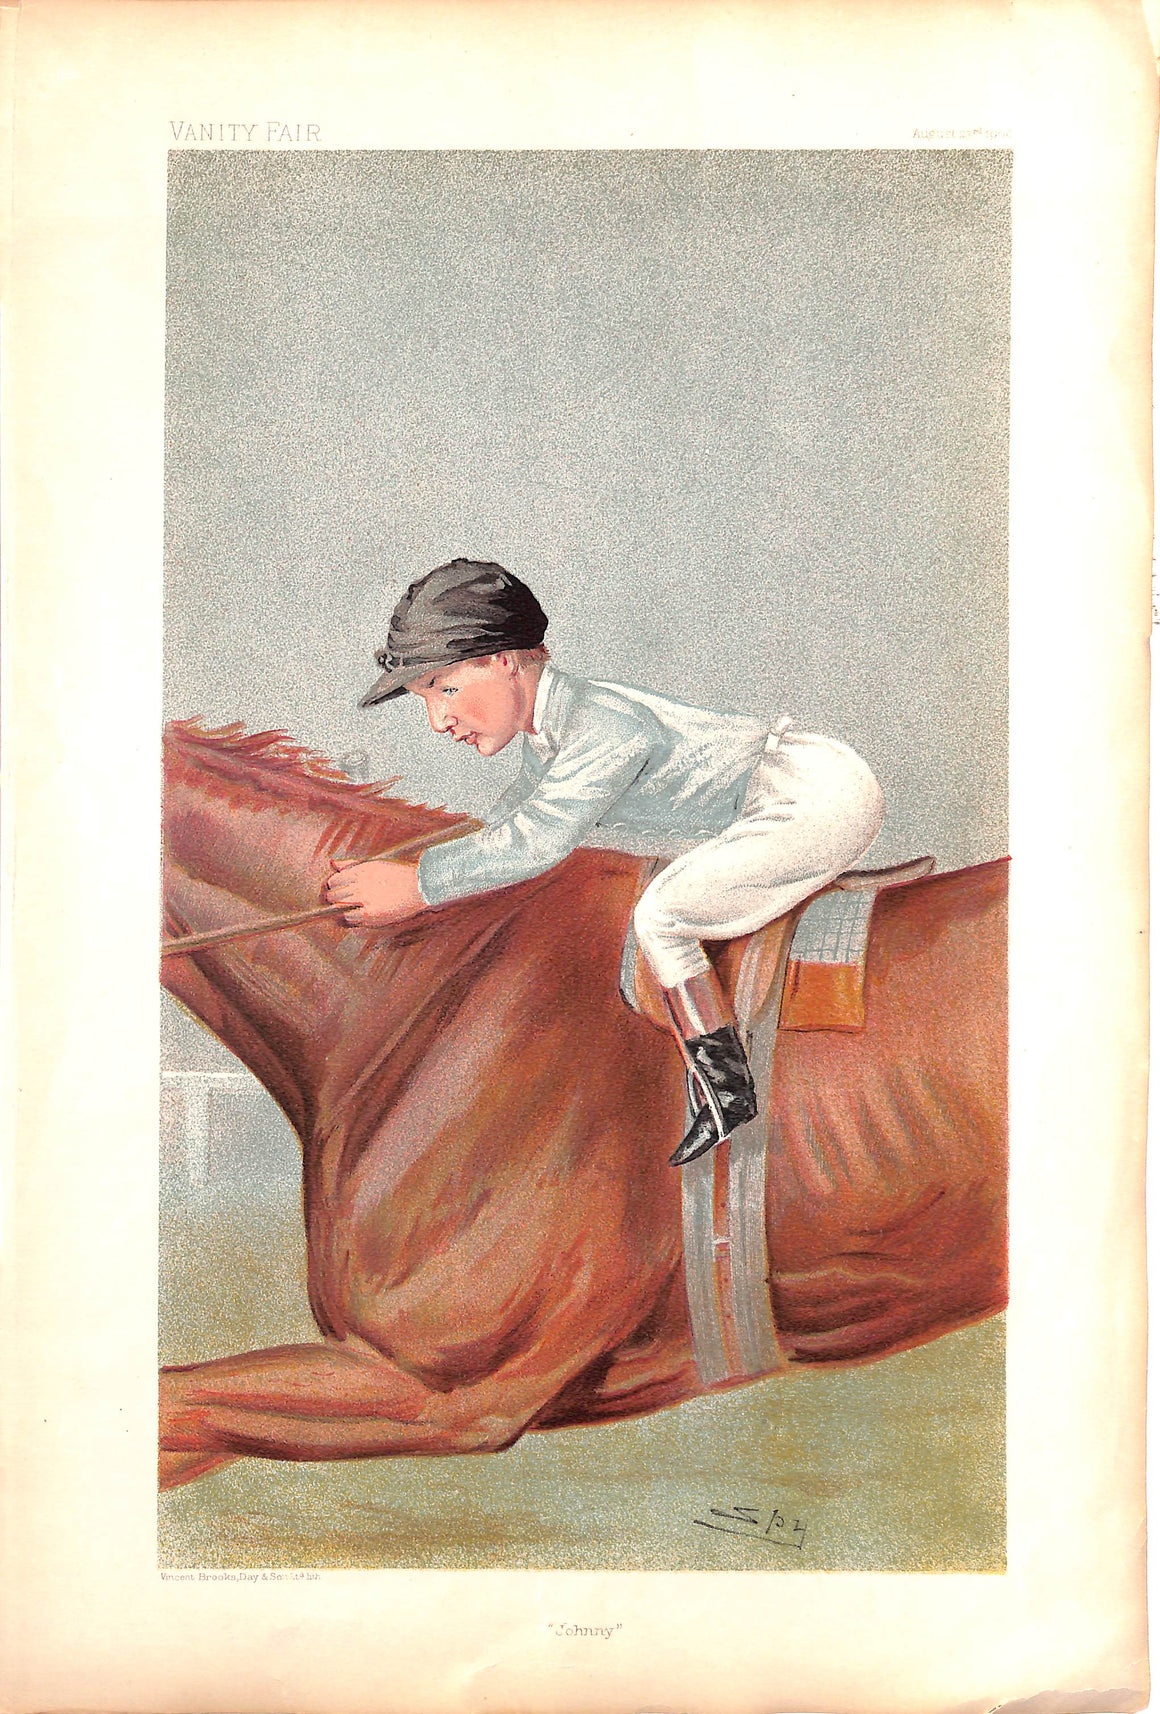 "Johnny" Reiff Spy Vanity Fair August 23rd 1900